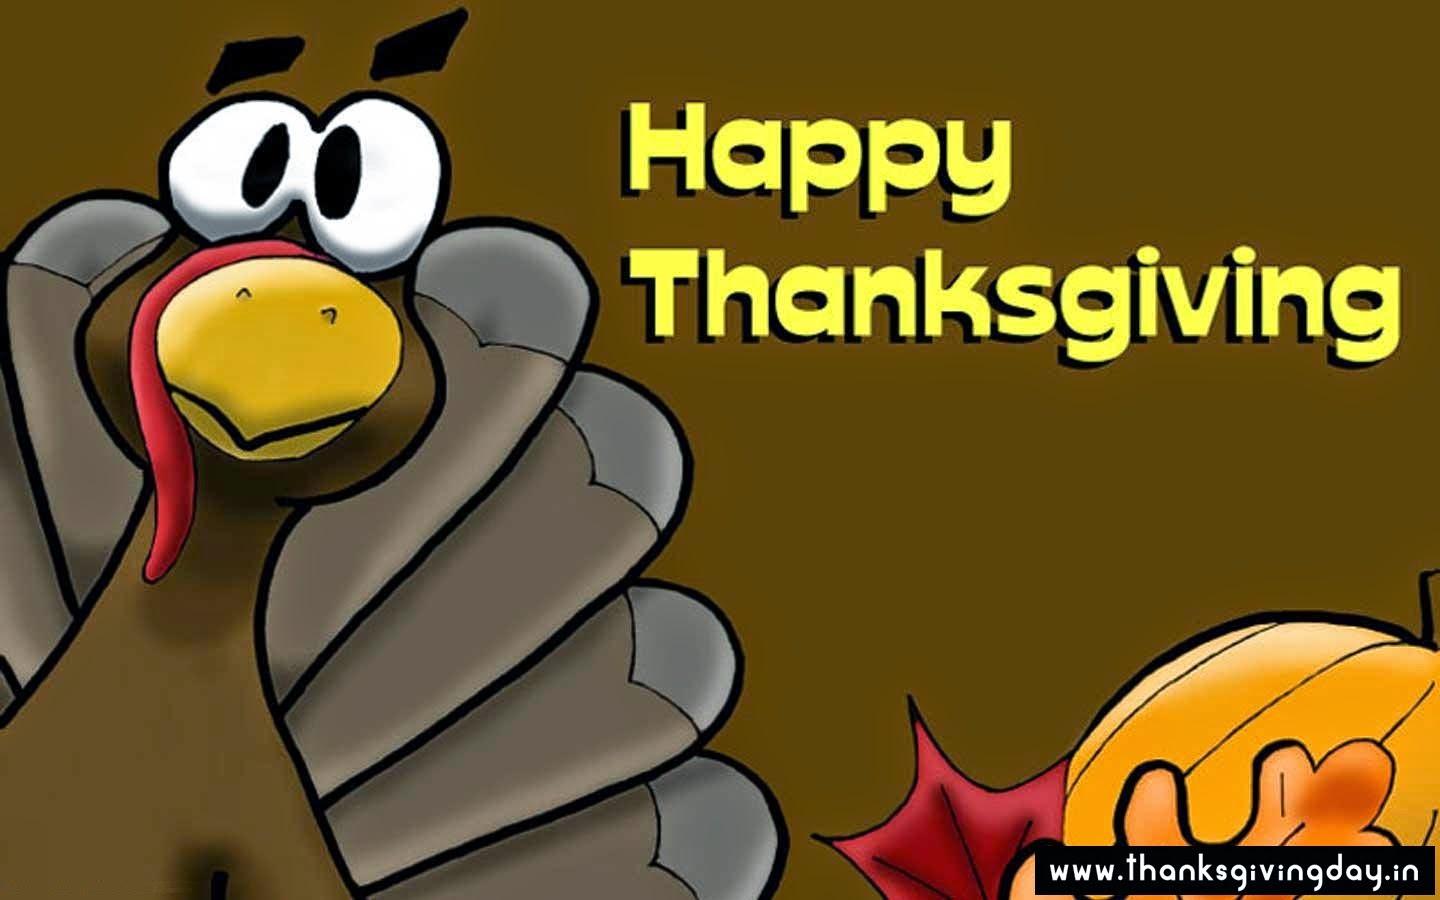 Thanksgiving day HD Wallpaper messages inspirational